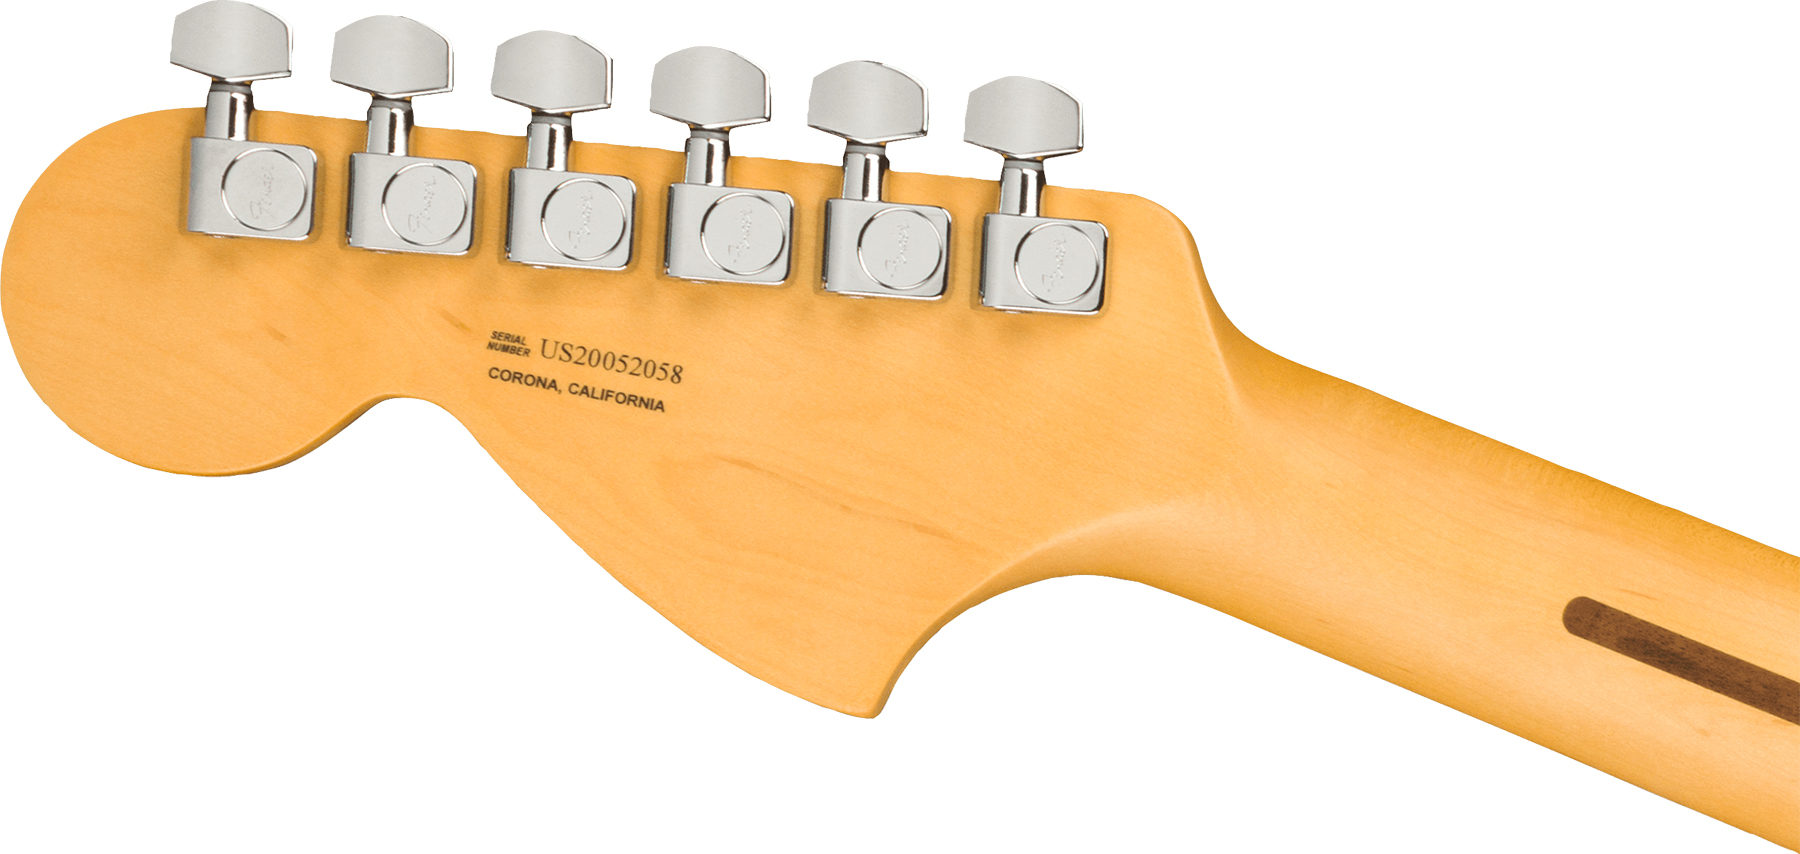 Fender Tele Deluxe American Professional Ii Usa Mn - Olympic White - Televorm elektrische gitaar - Variation 1